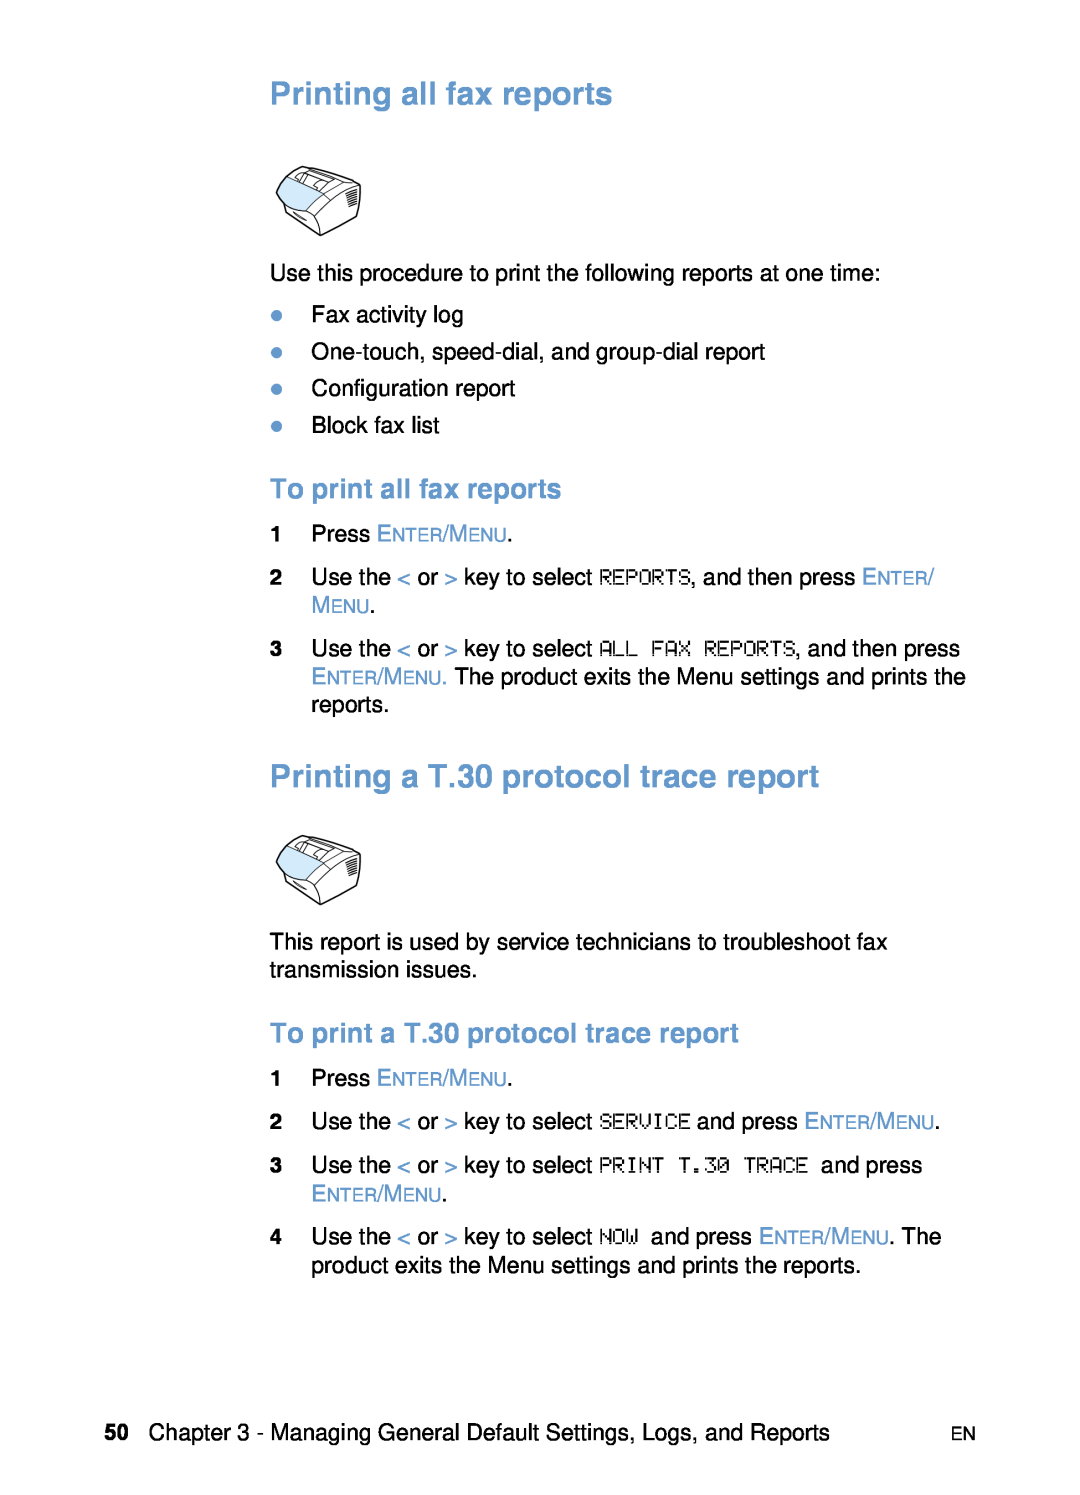 HP 3200 manual Printing all fax reports, Printing a T.30 protocol trace report, To print all fax reports 